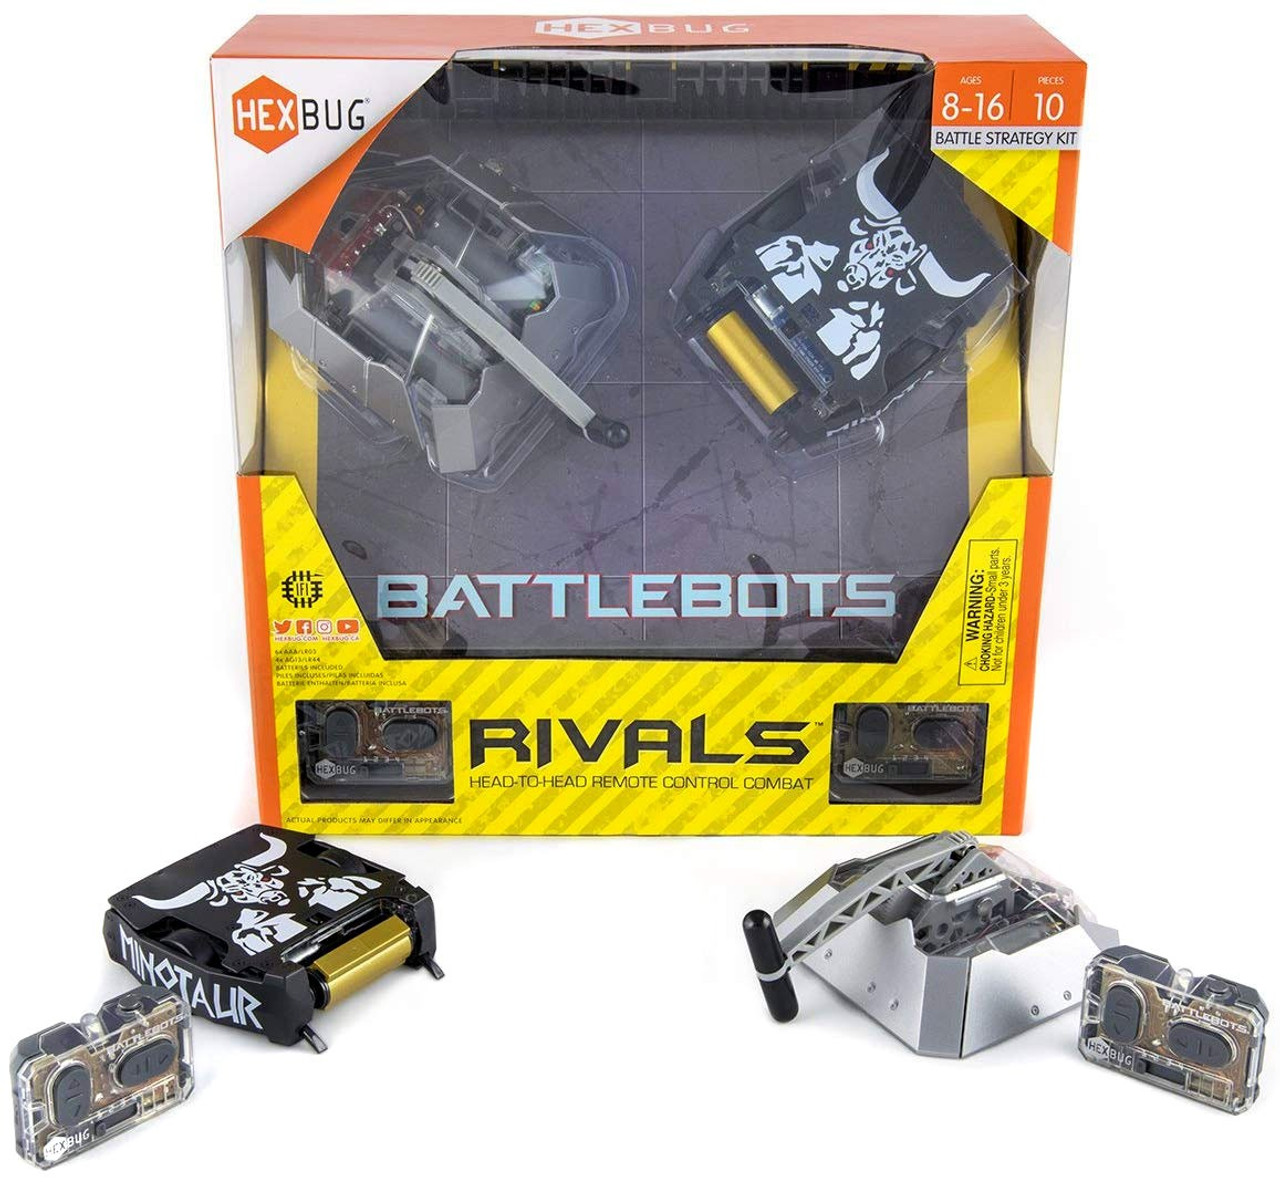 Hexbug Battlebots Rivals Beta Vs Minotaur Battle Strategy Kit Innovation First Toywiz - 3 hot man warning roblox amino